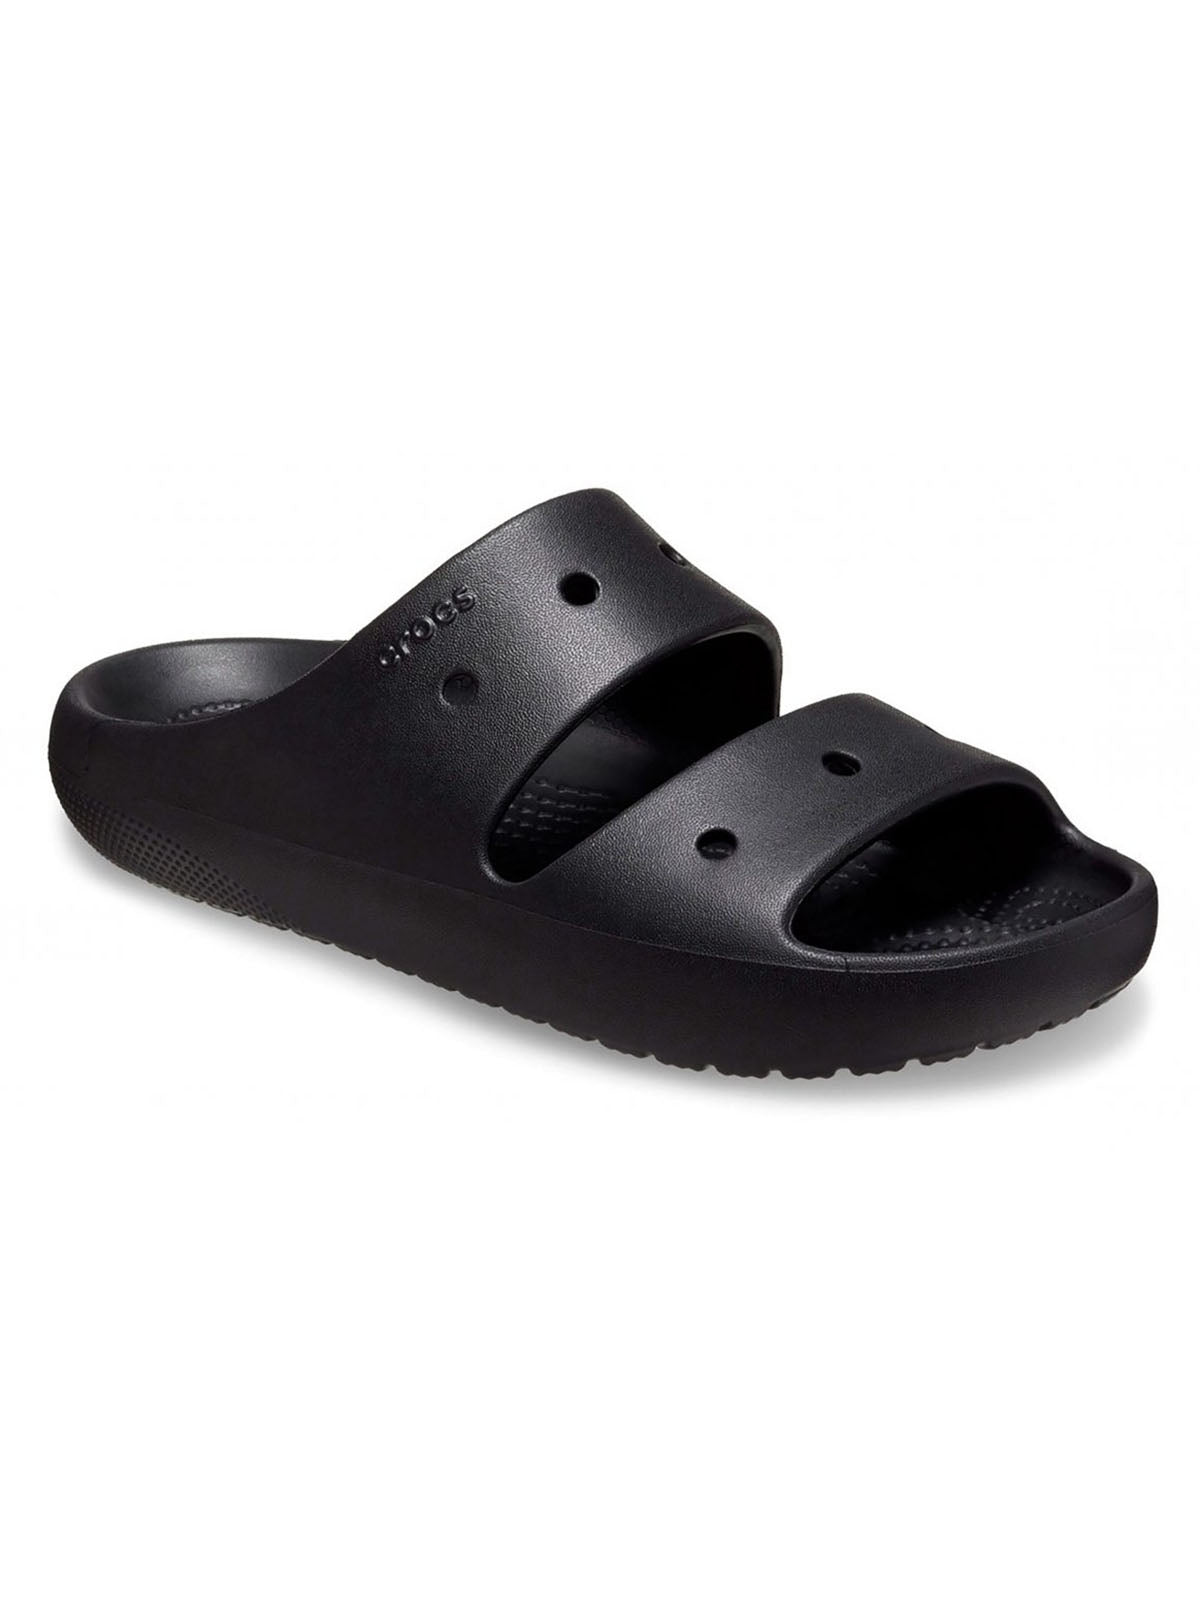 Sandali Uomo Crocs - Classic Sandal 2 - Nero